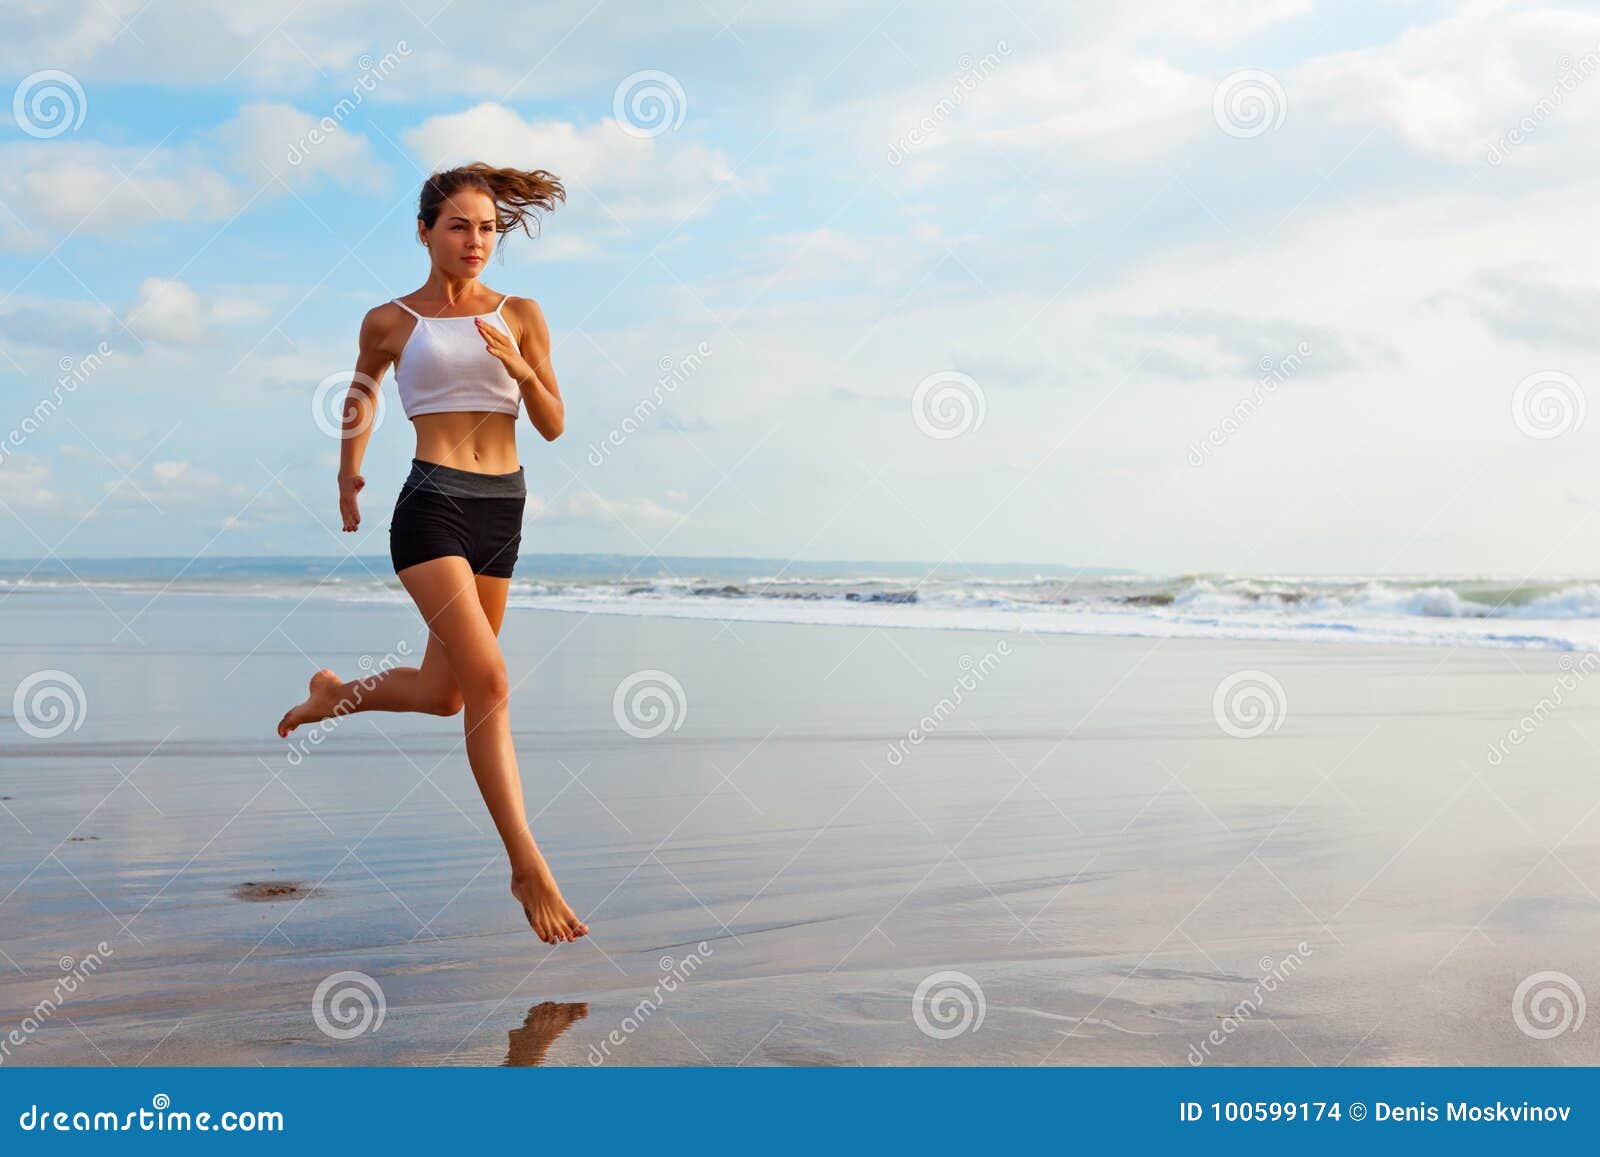 running on beach barefoot